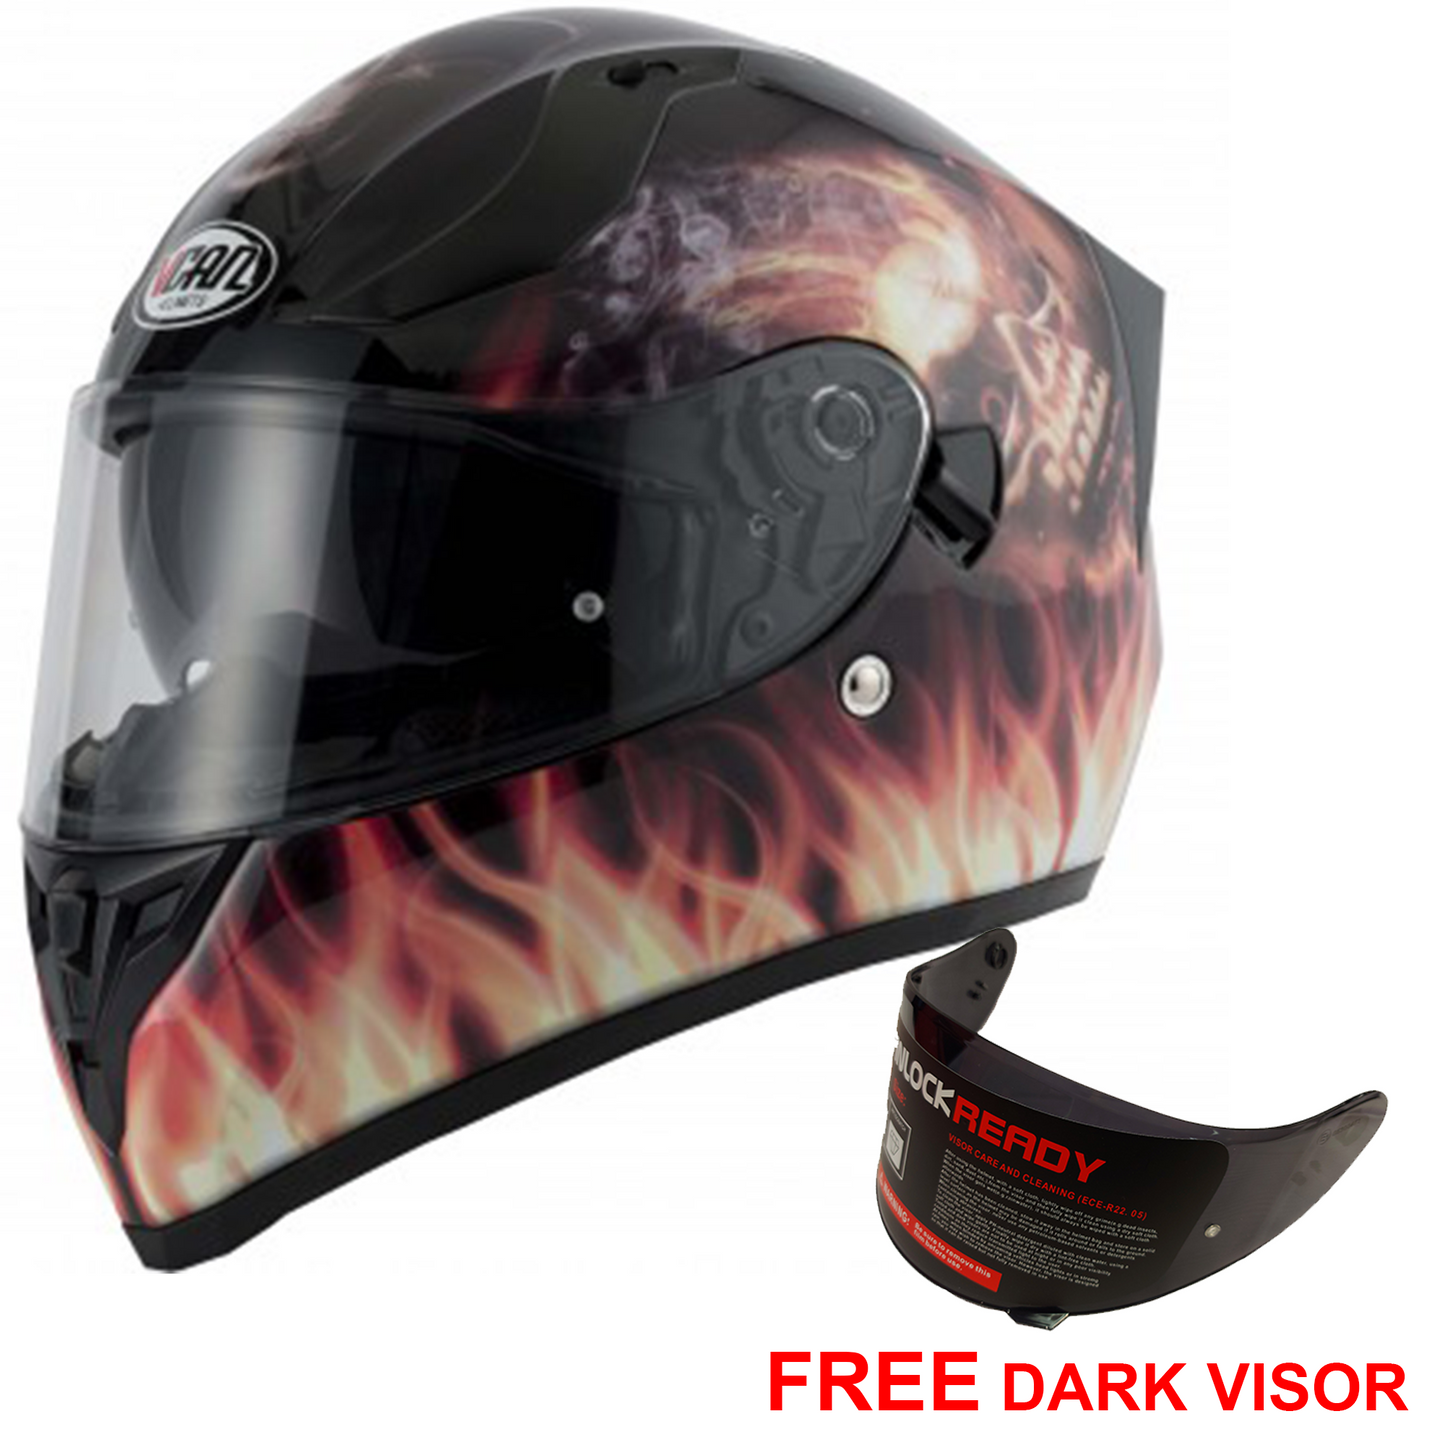 Vcan V128 - Flame Graphic - Free Dark Visor